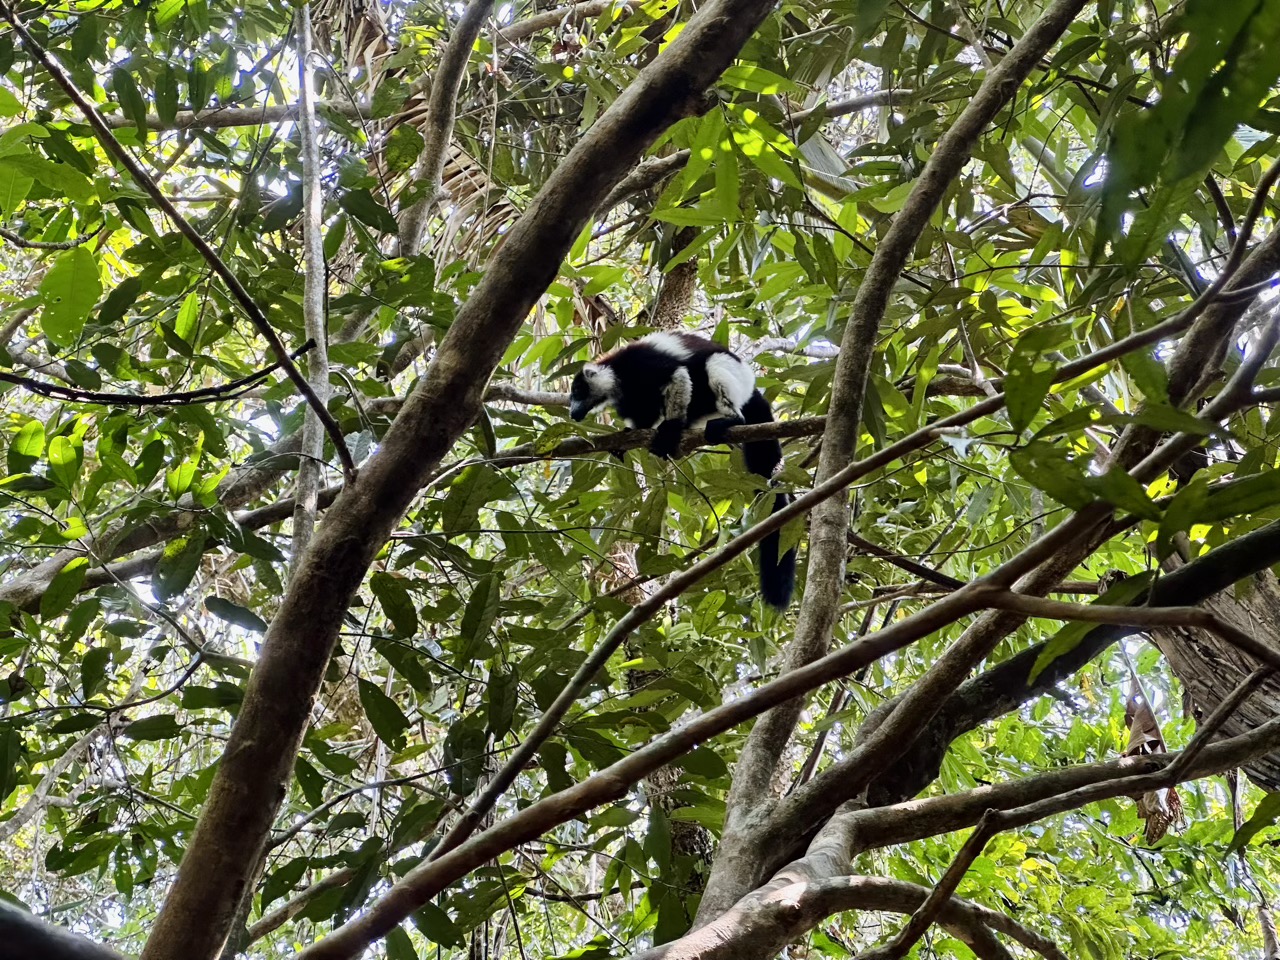 A lemur in the wild